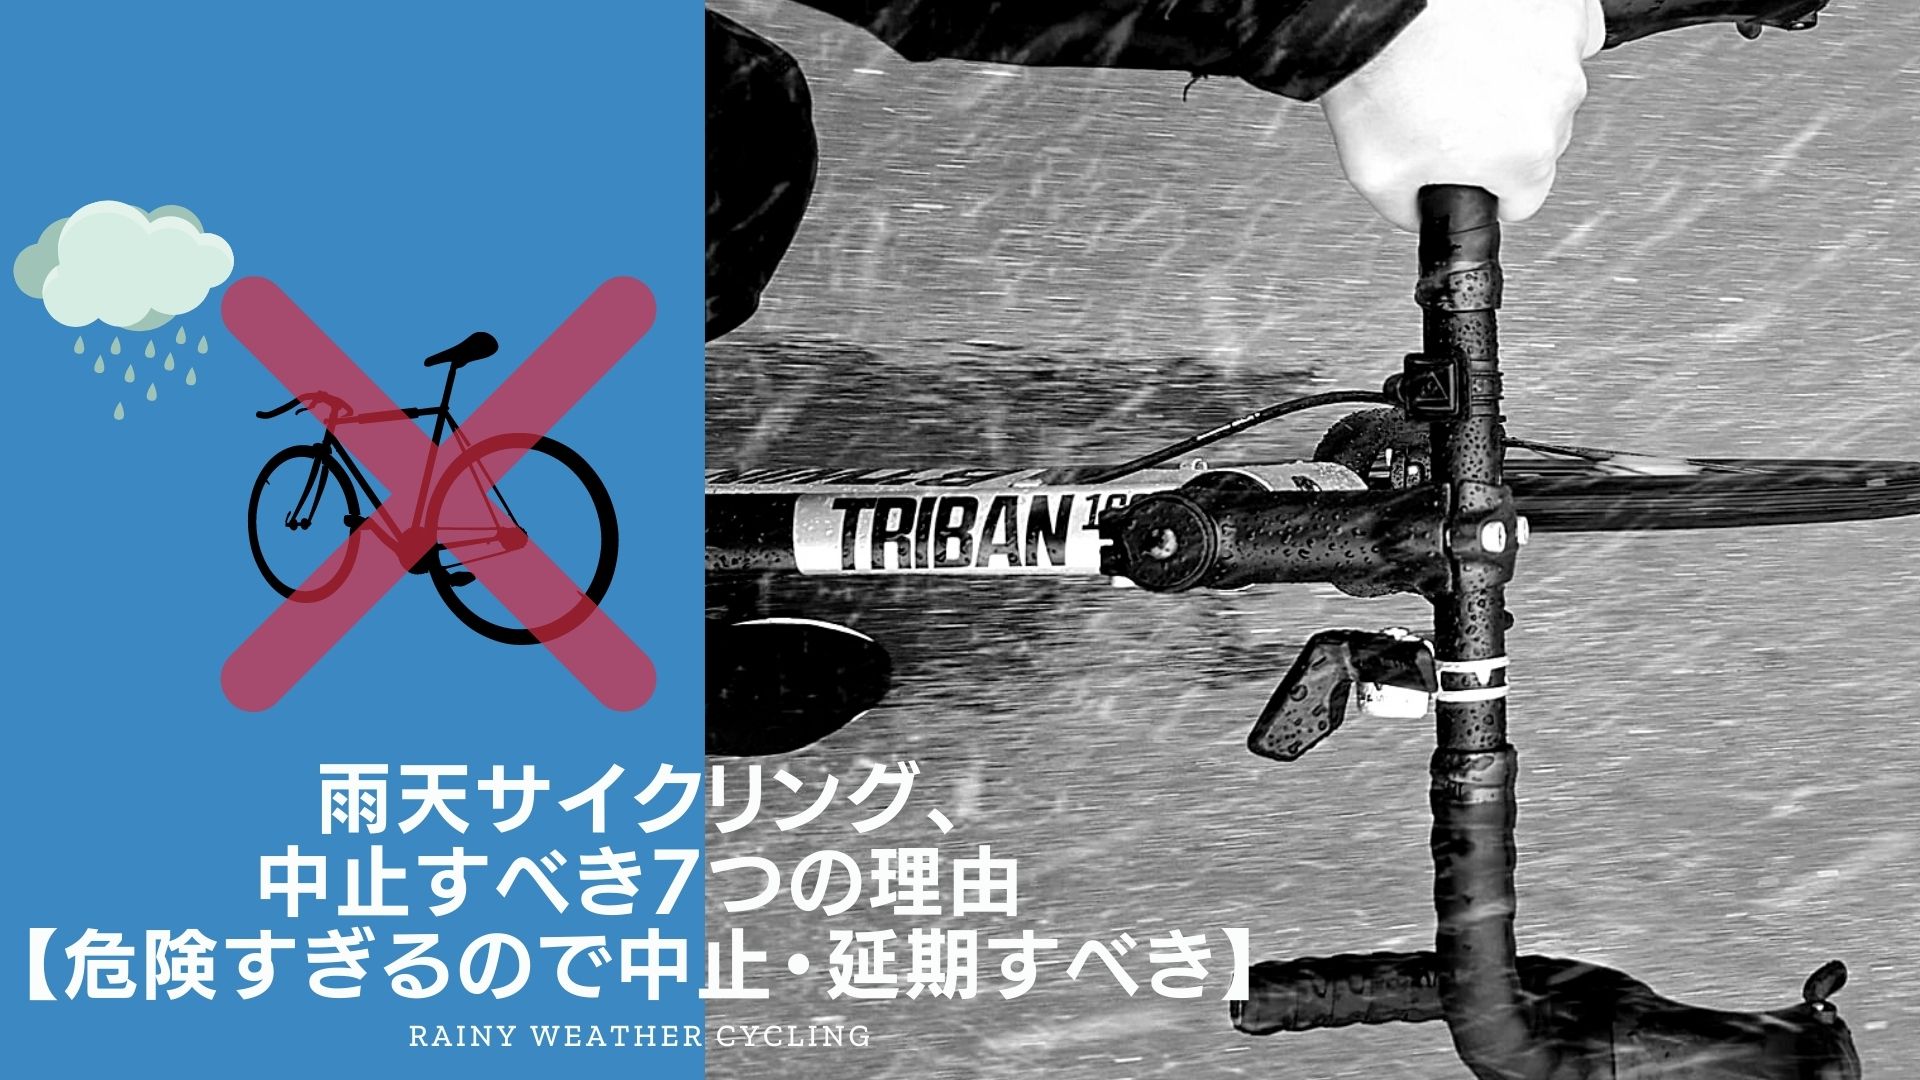 Rainy weather cycling